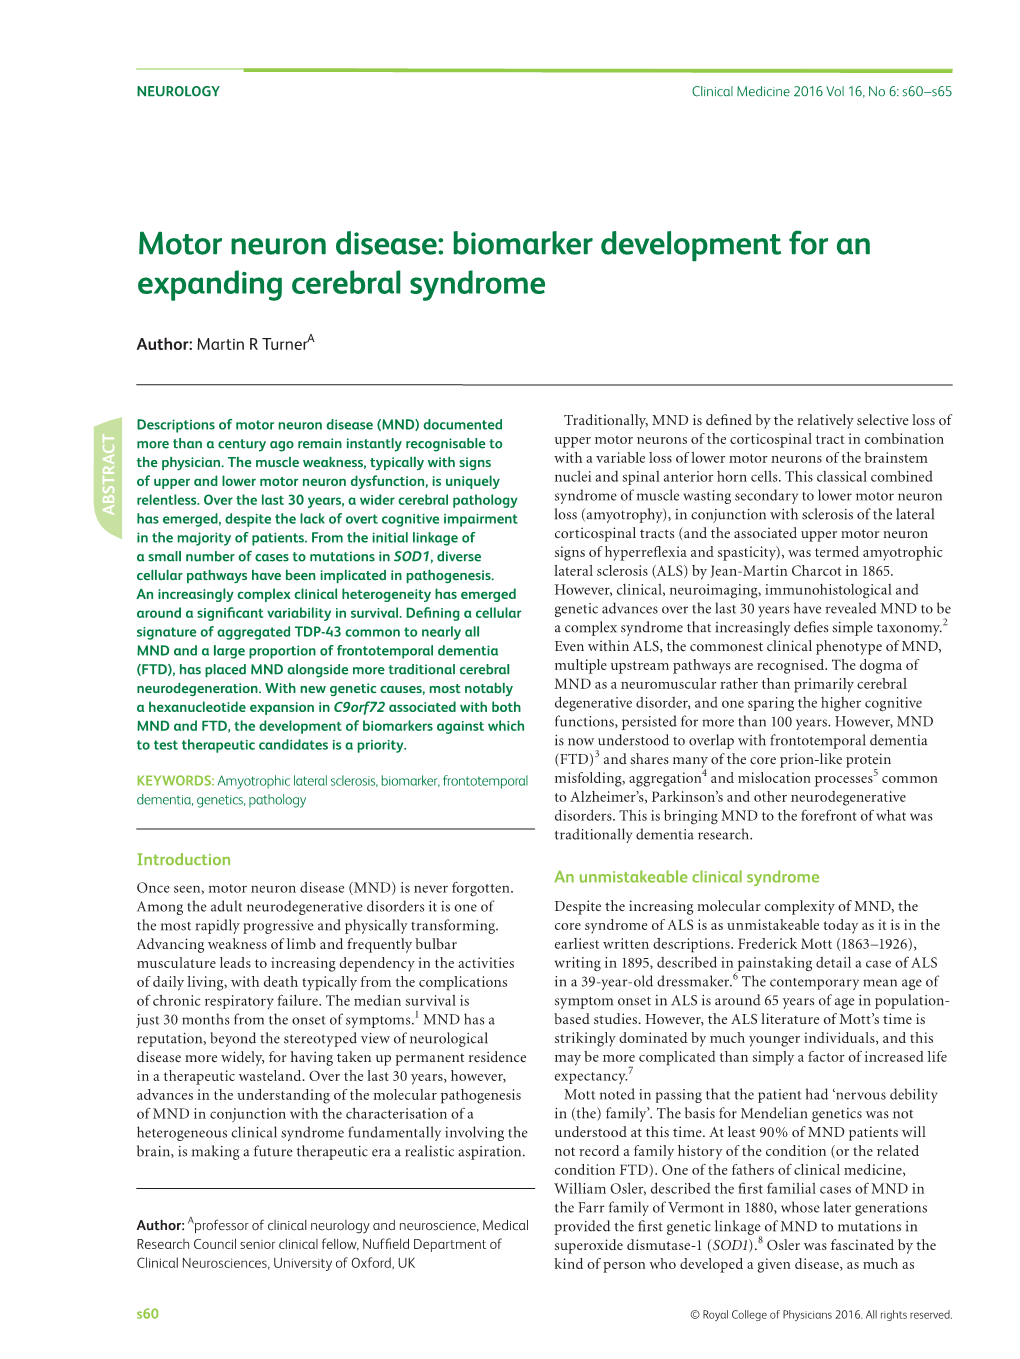 Motor Neuron Disease: Biomarker Development for an Expanding Cerebral Syndrome